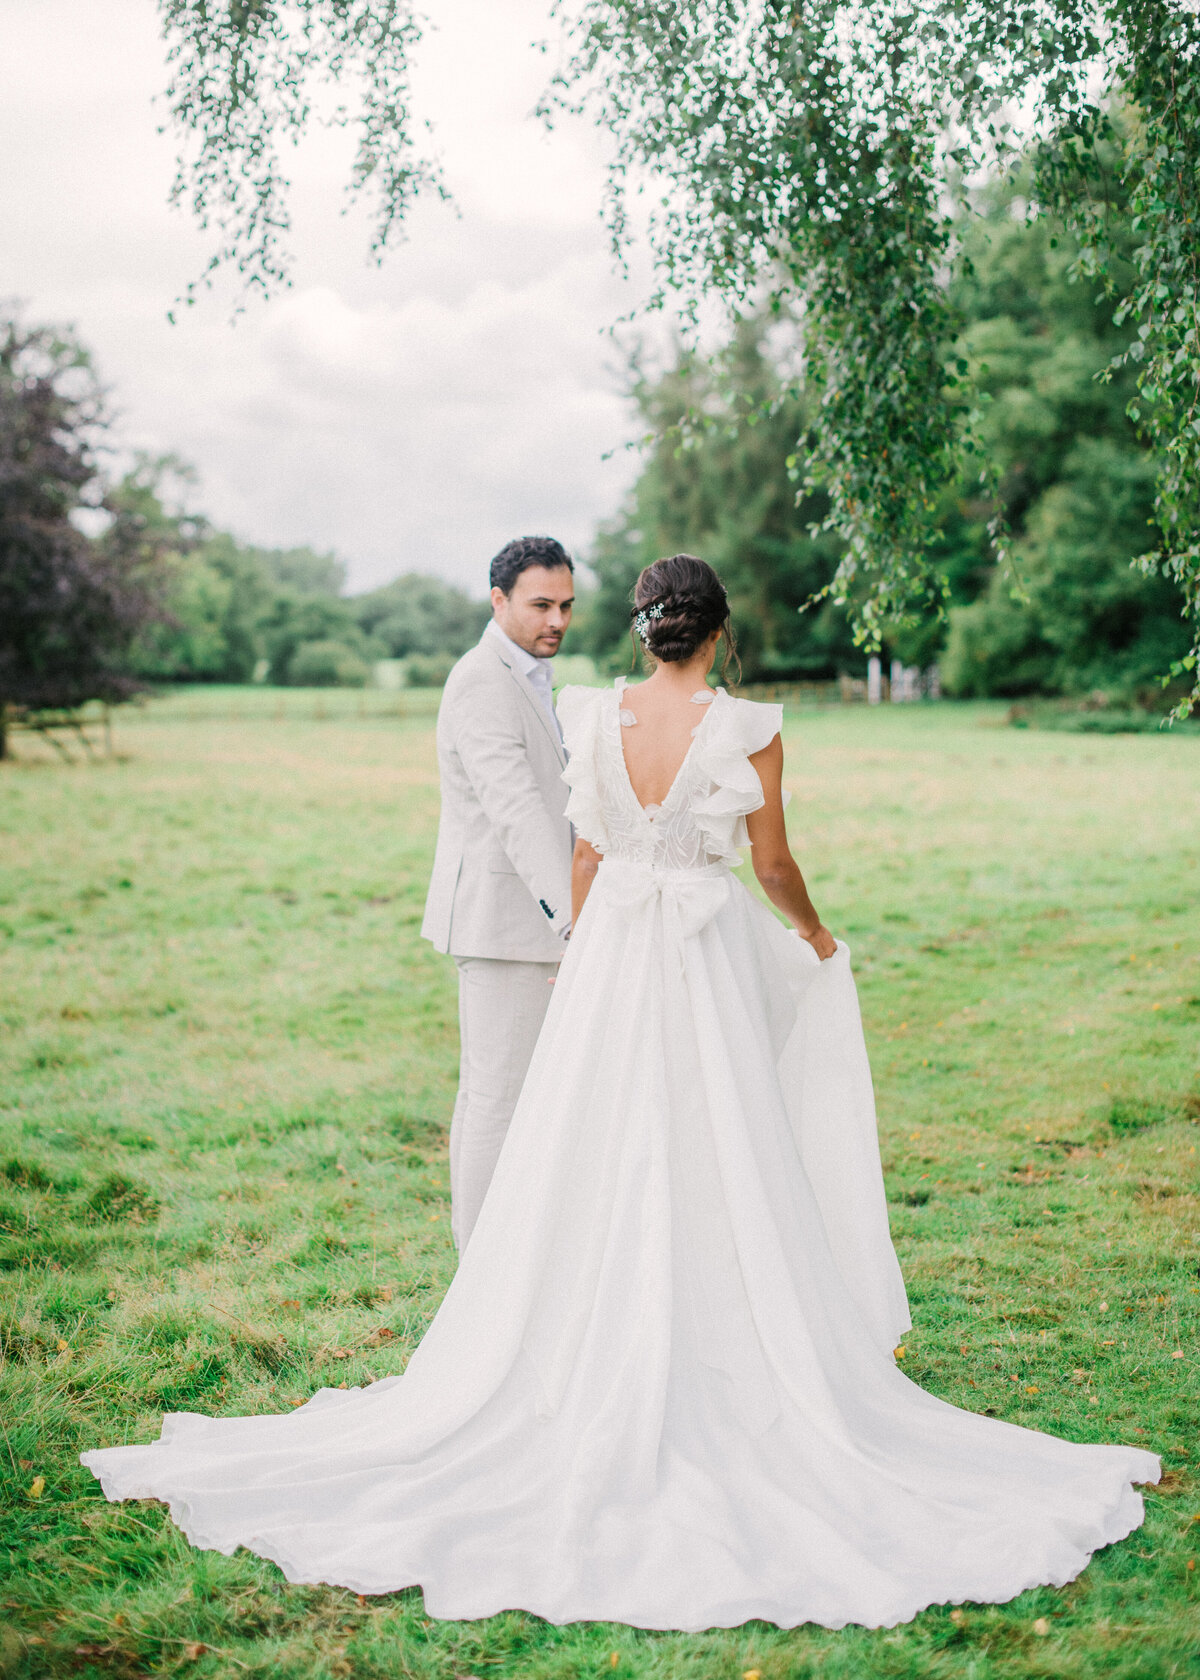 Wedding Planner-Luxe mariages Organisateur-UK Edition for British brides-GB